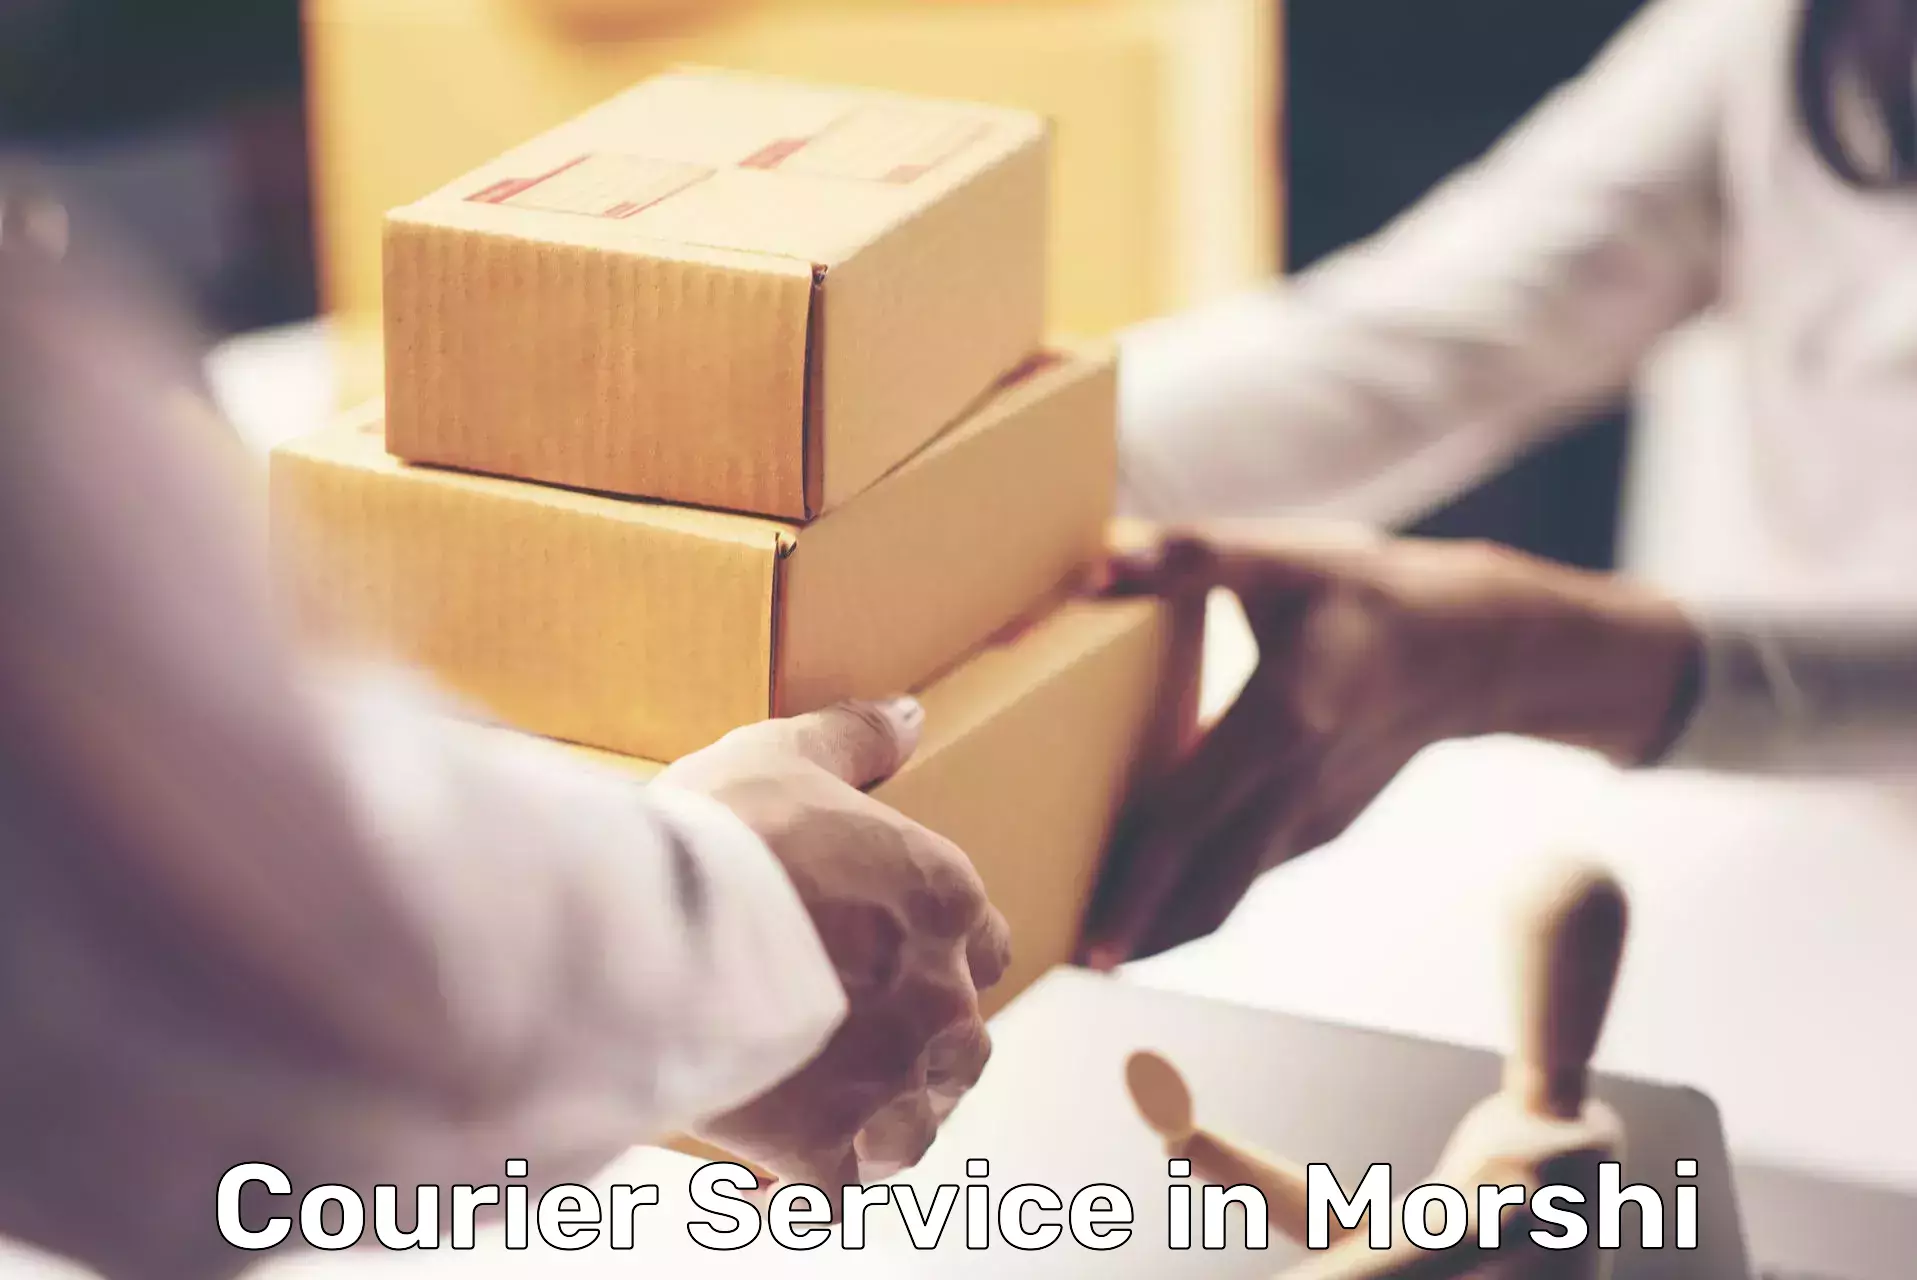 Express postal services in Morshi